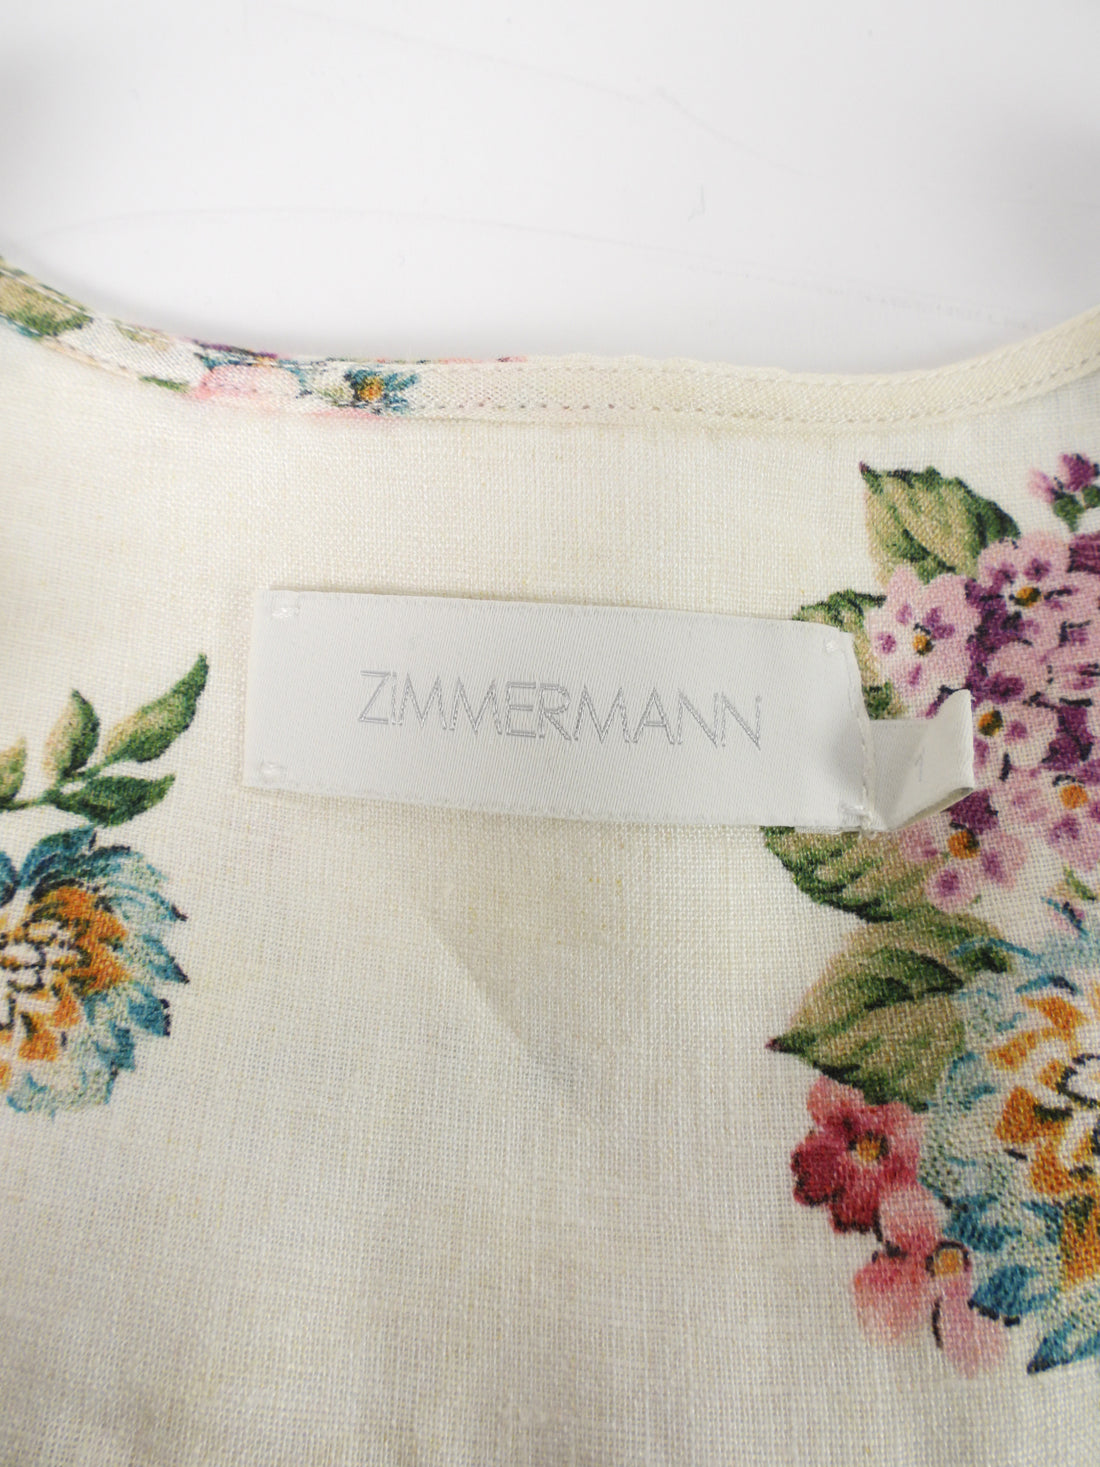 Zimmermann Honour Ruffle Floral Corset Dress - S (4/6)